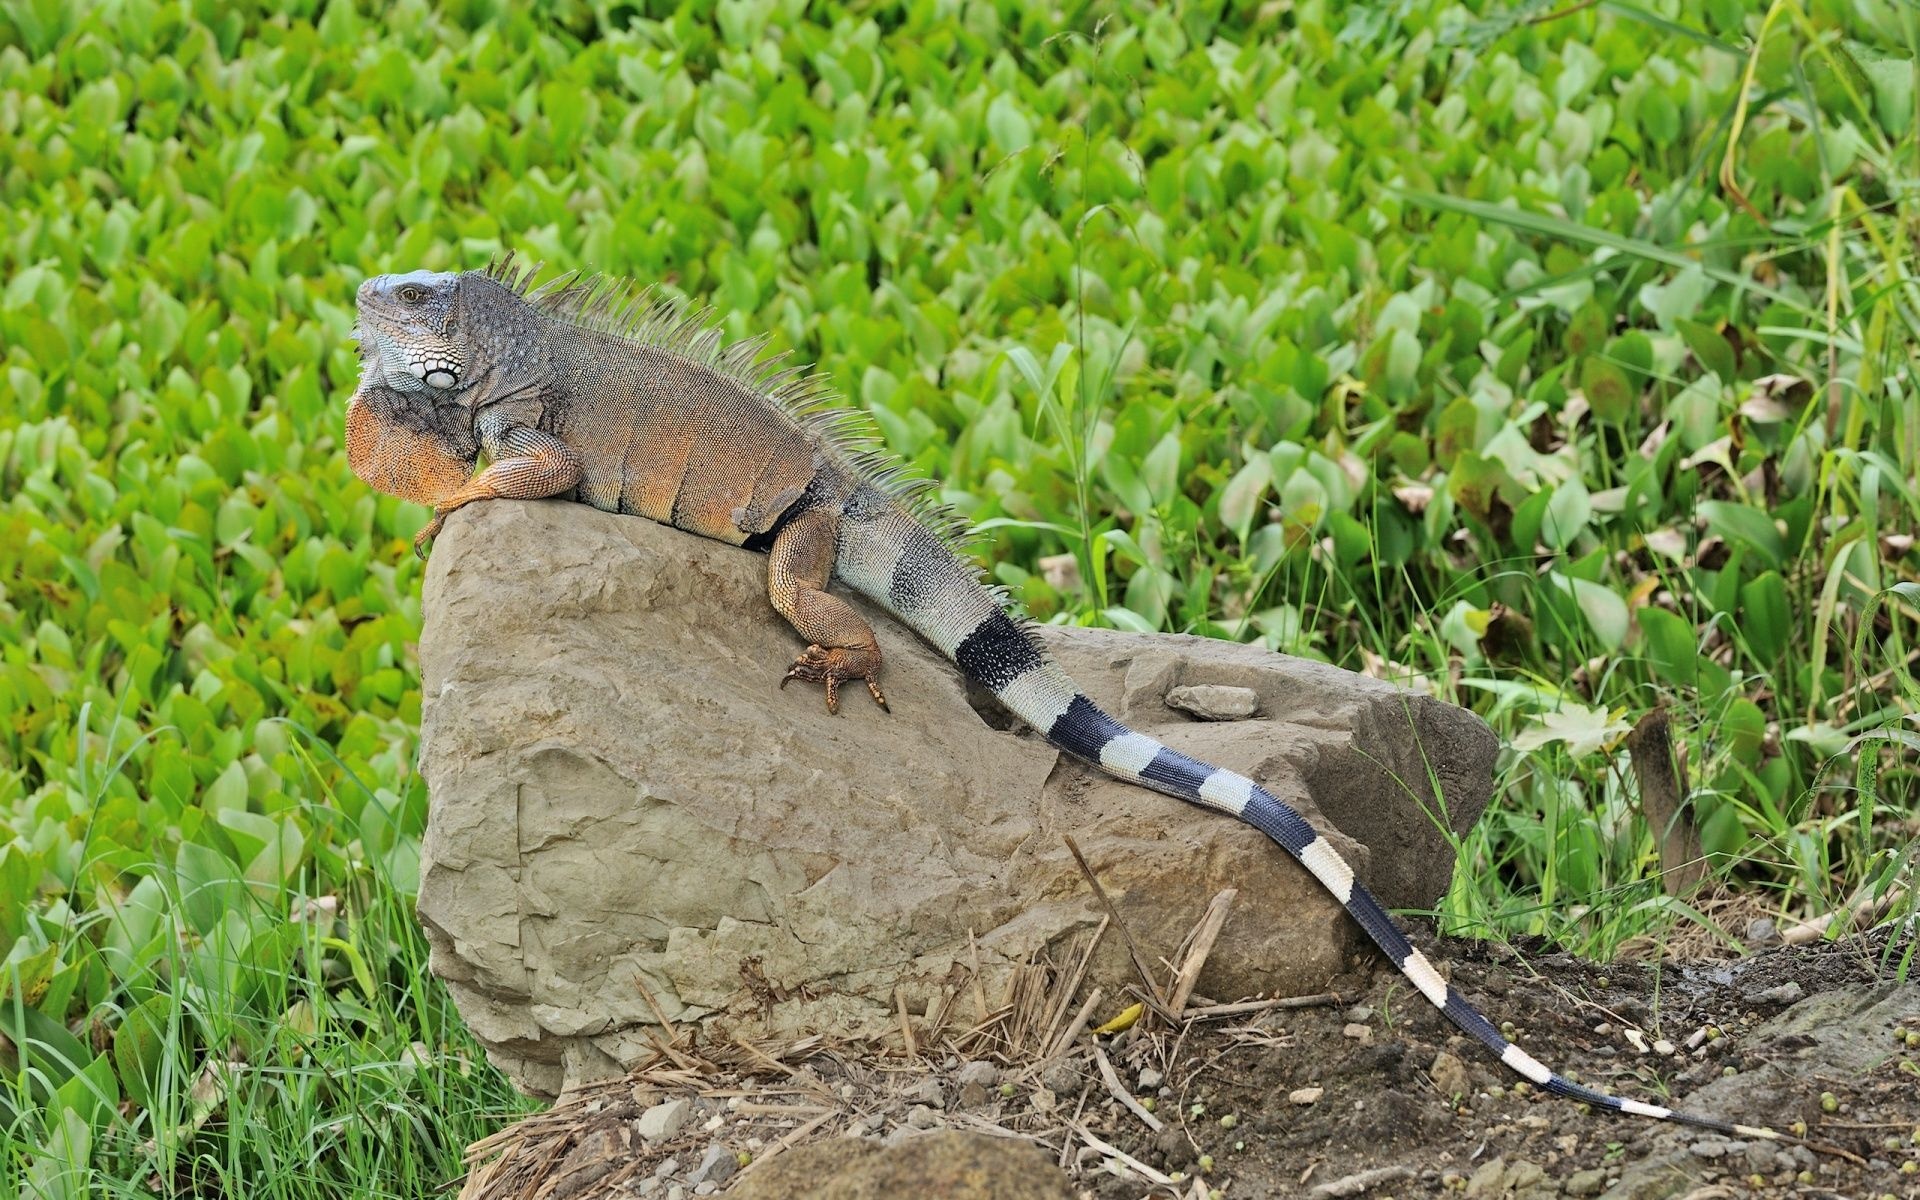 Reptile Lizard Tail Iguana Stone